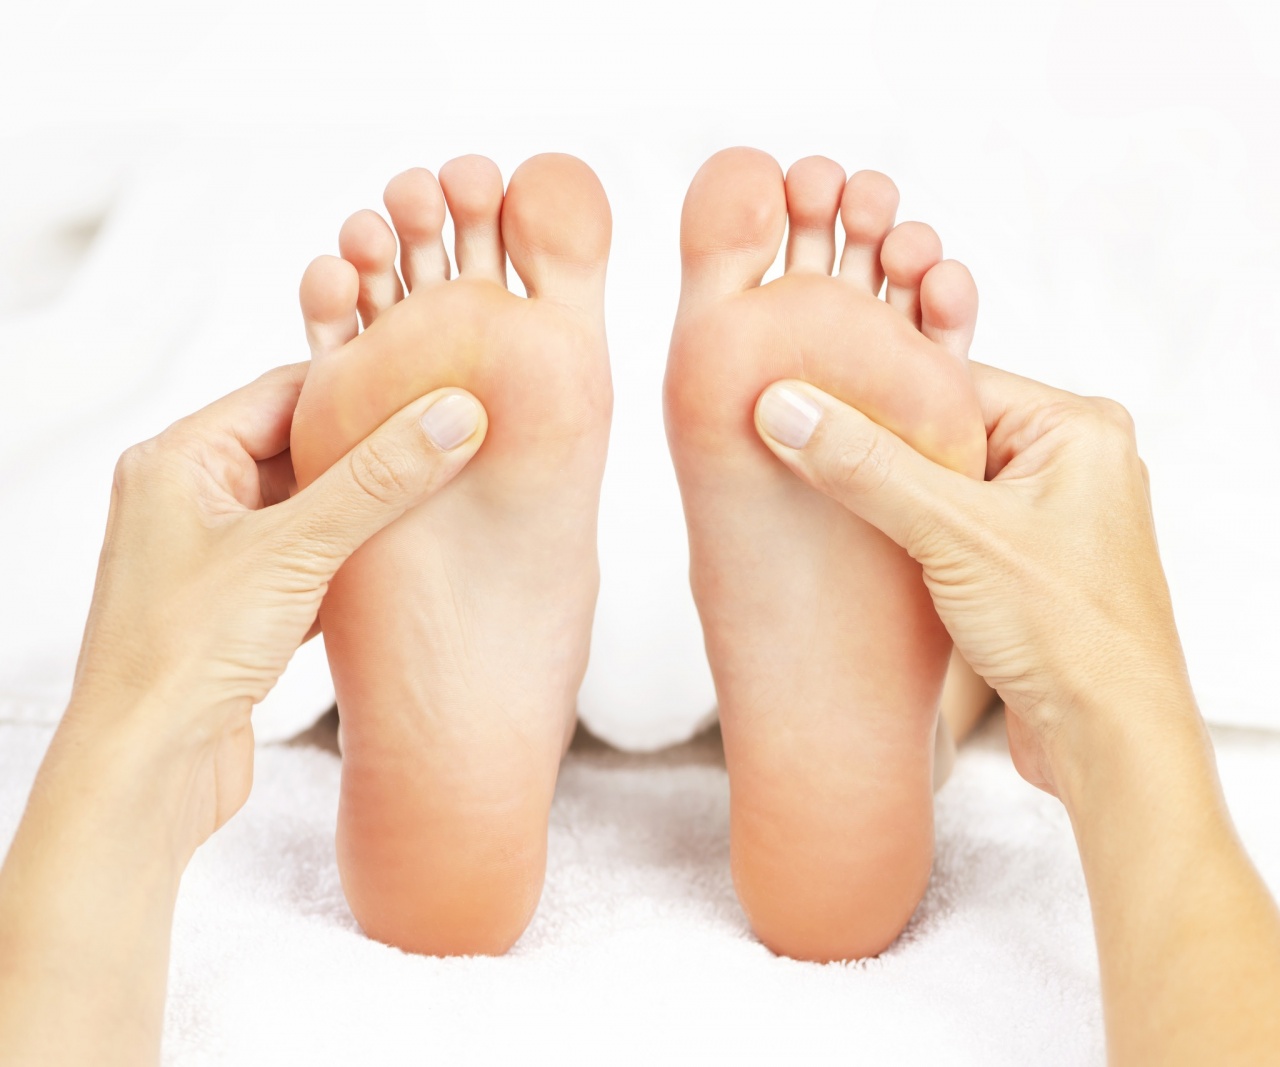 Reflexology massage on the feet